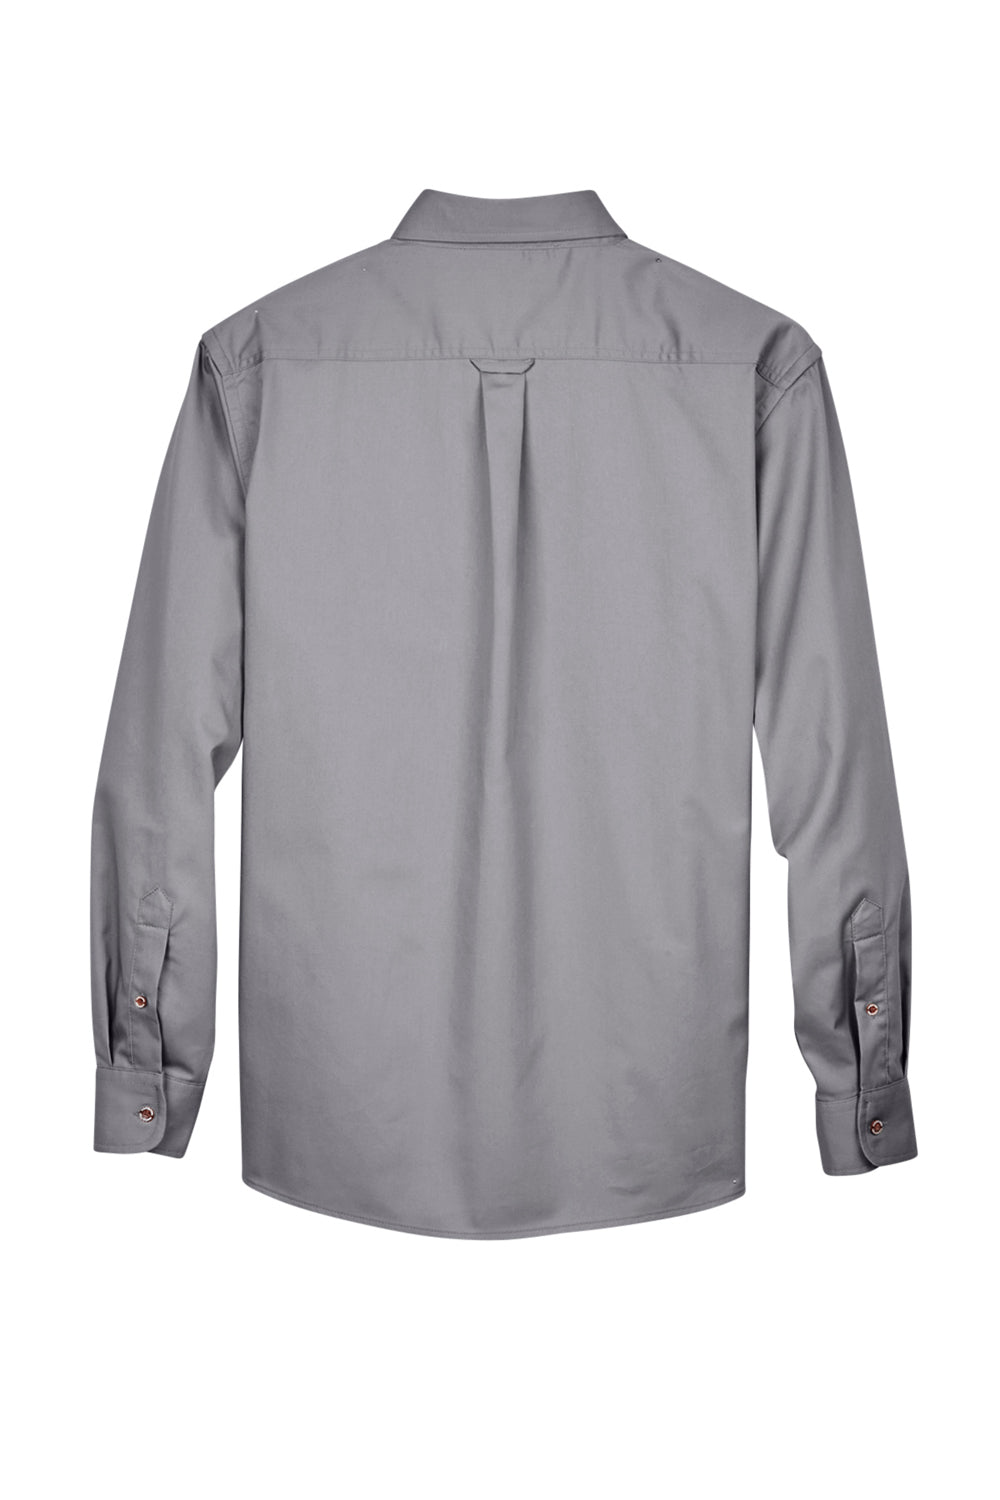 Harriton M500/M500T Wrinkle Resistant Long Sleeve Button Down Shirt w/ Pocket Dark Grey Flat Back